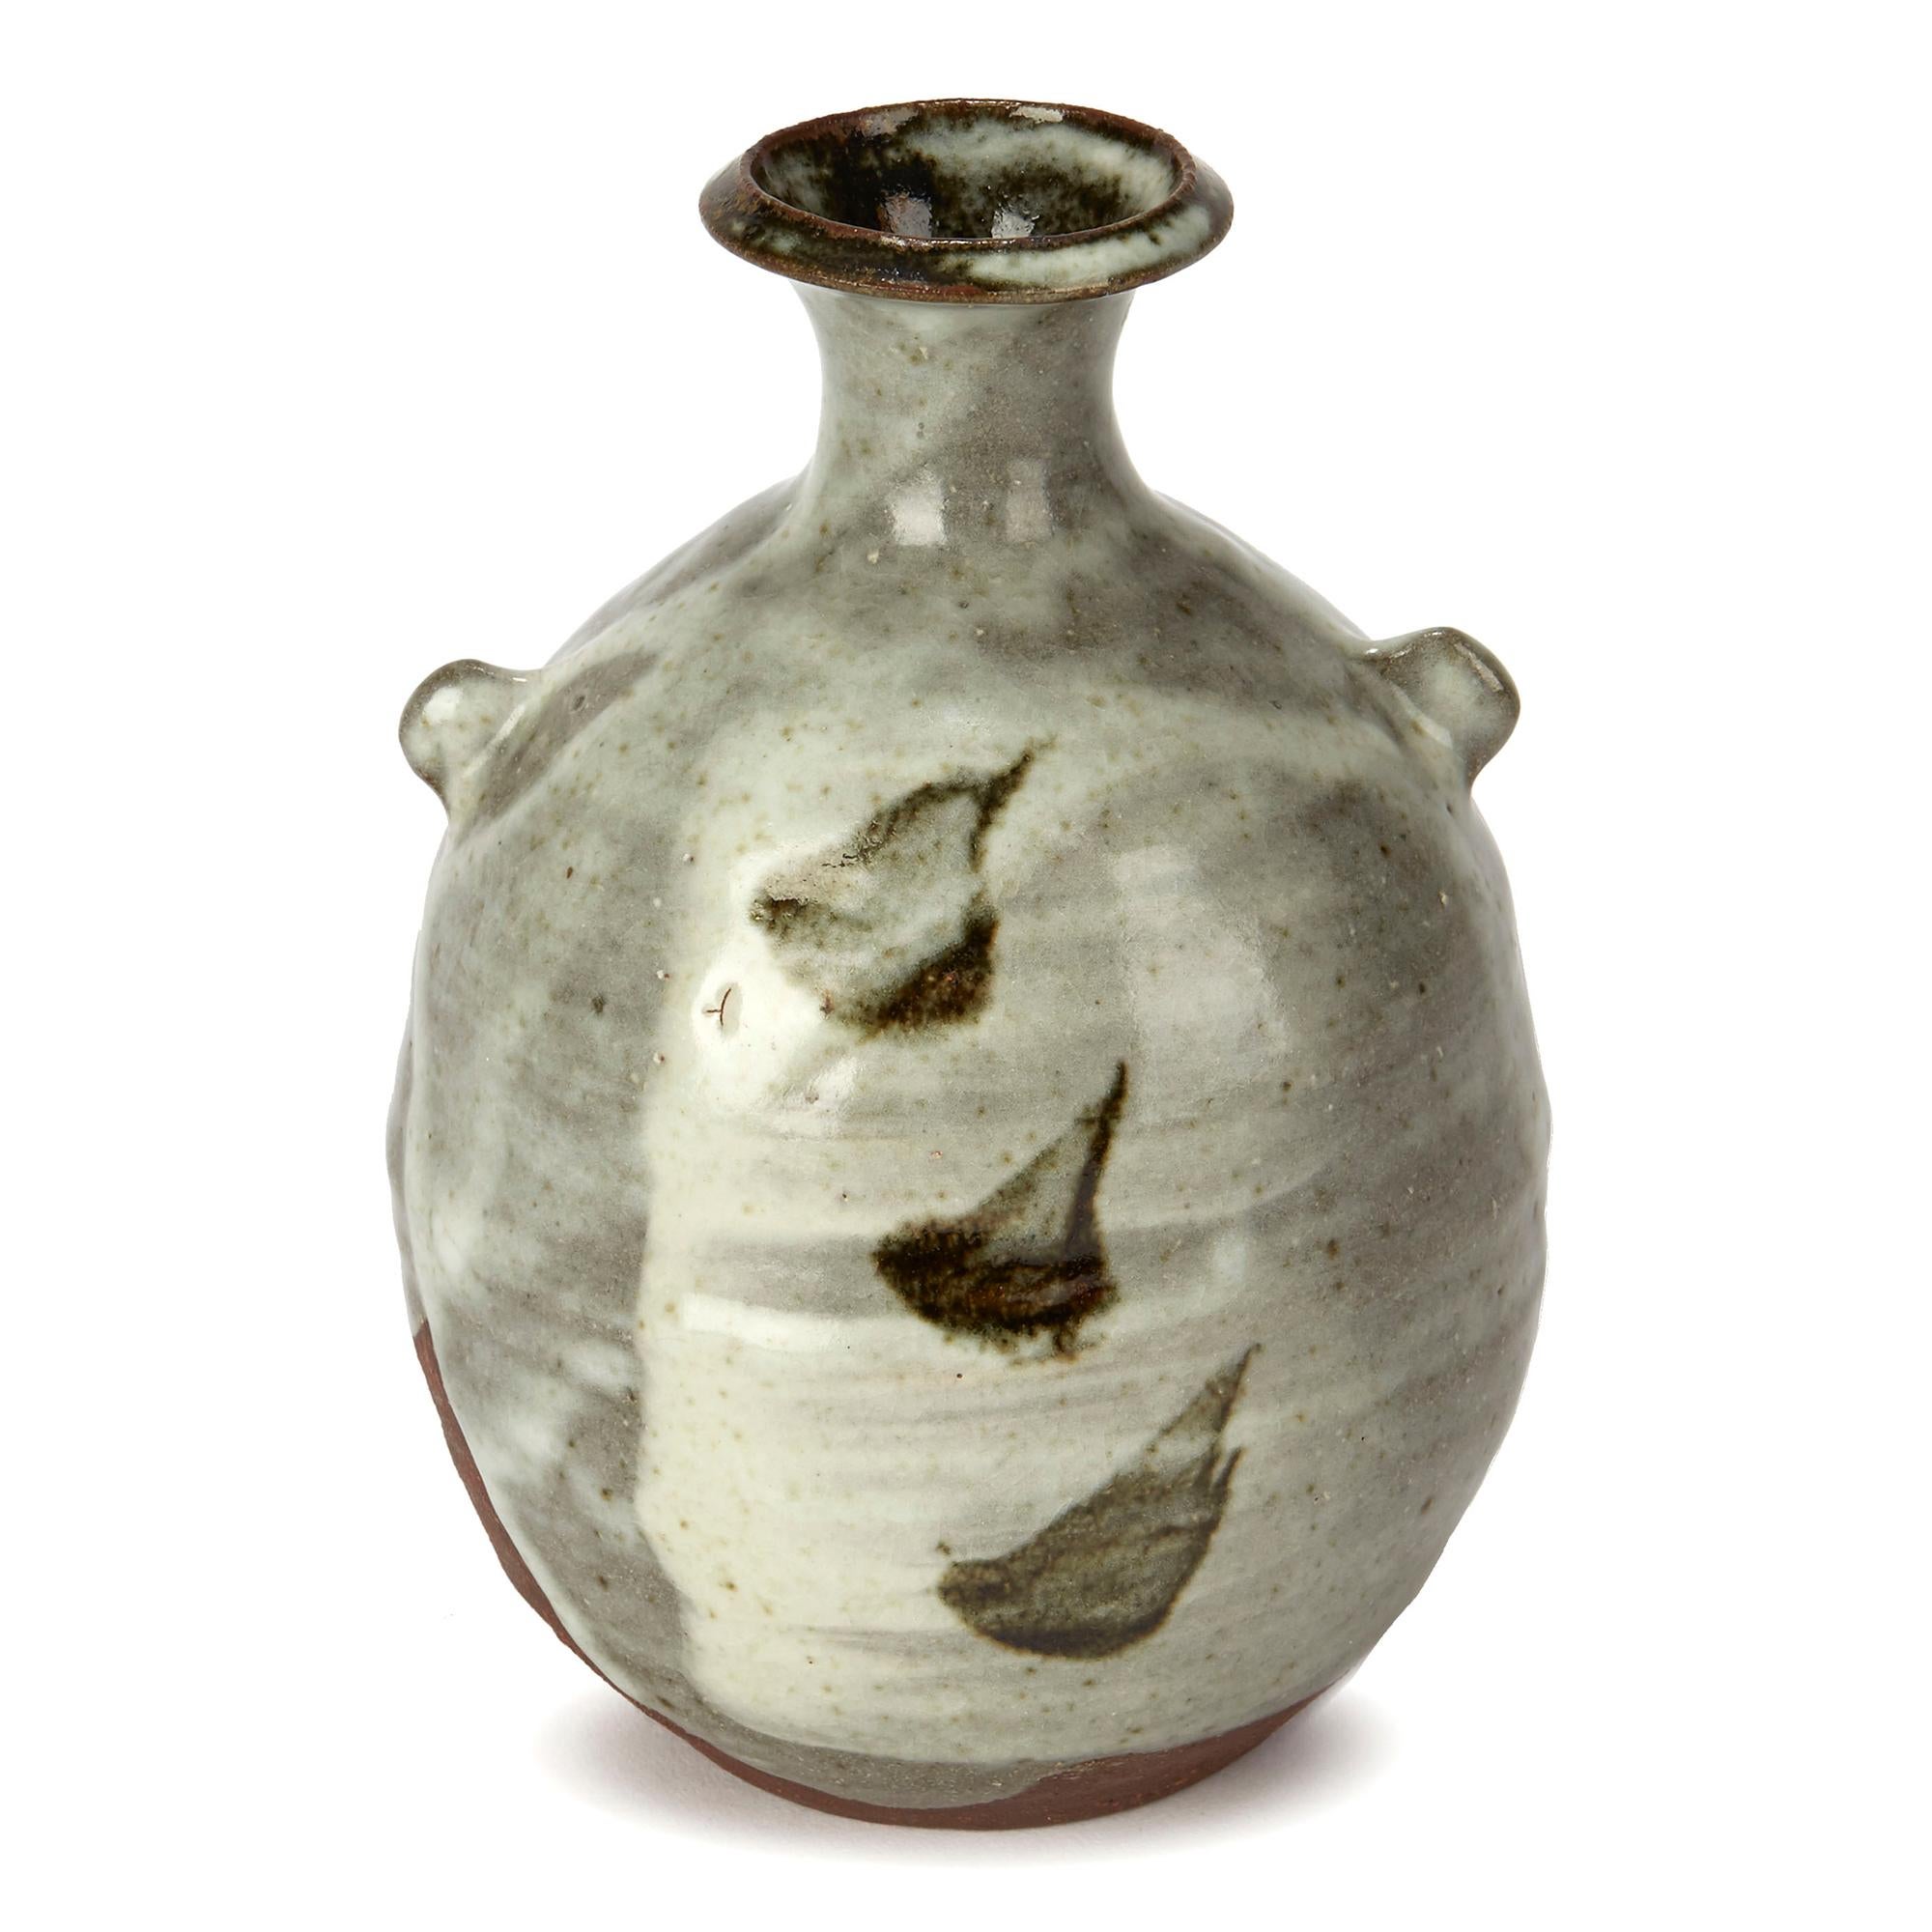 Janet Leach Grey and White Stoneware Studio Pottery Glazed Bottle Vase 1